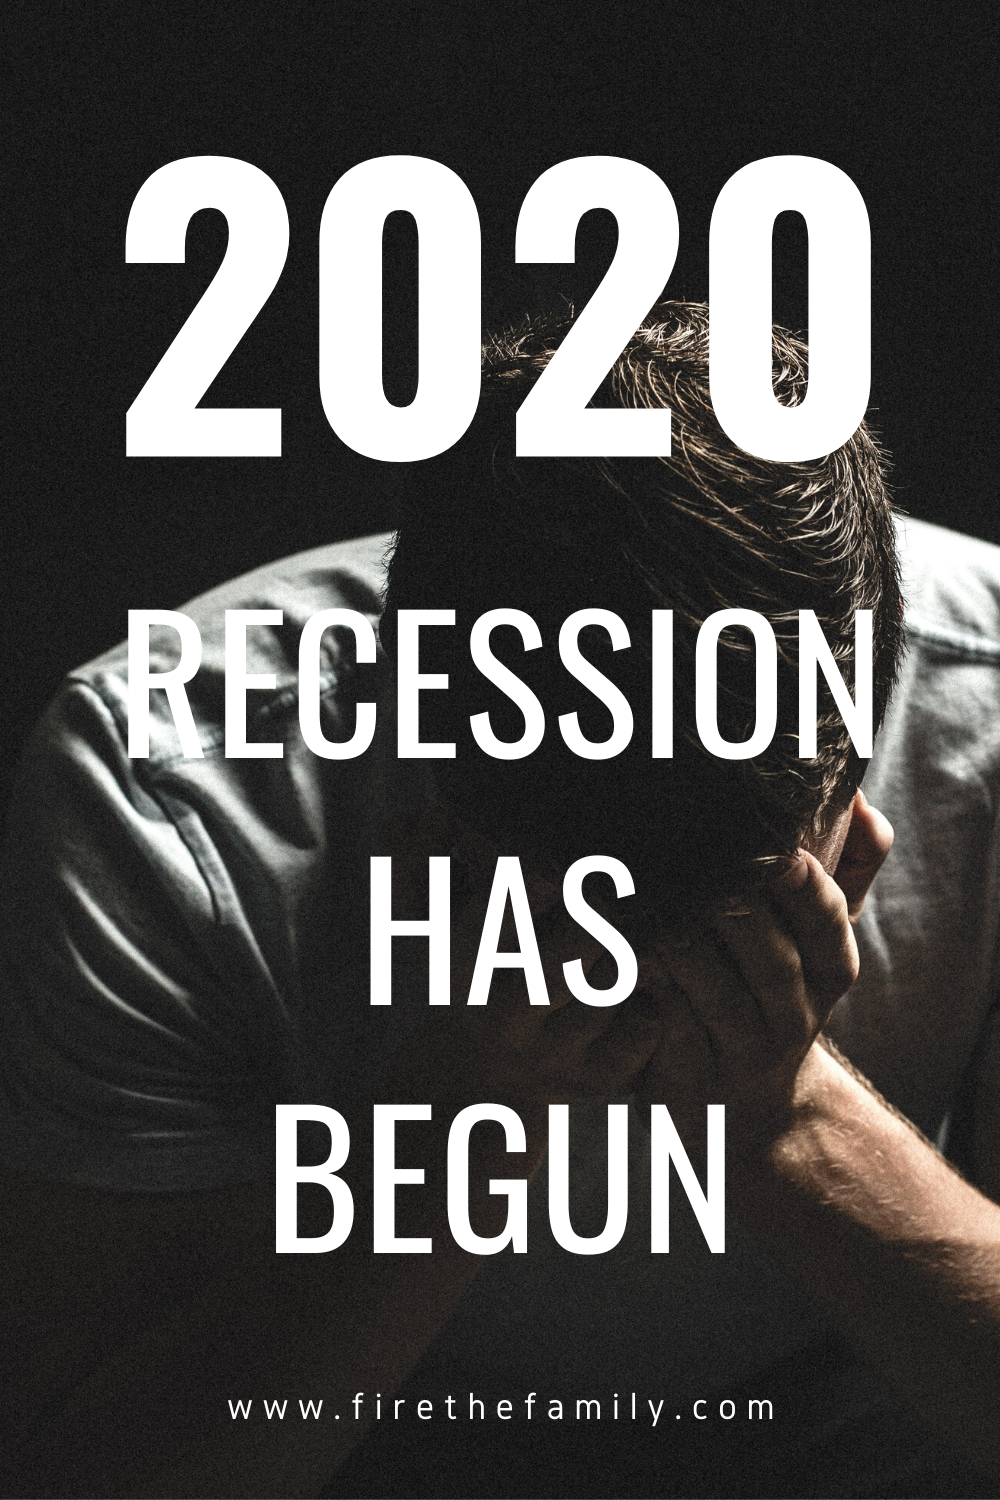 Recession Images, Recession T